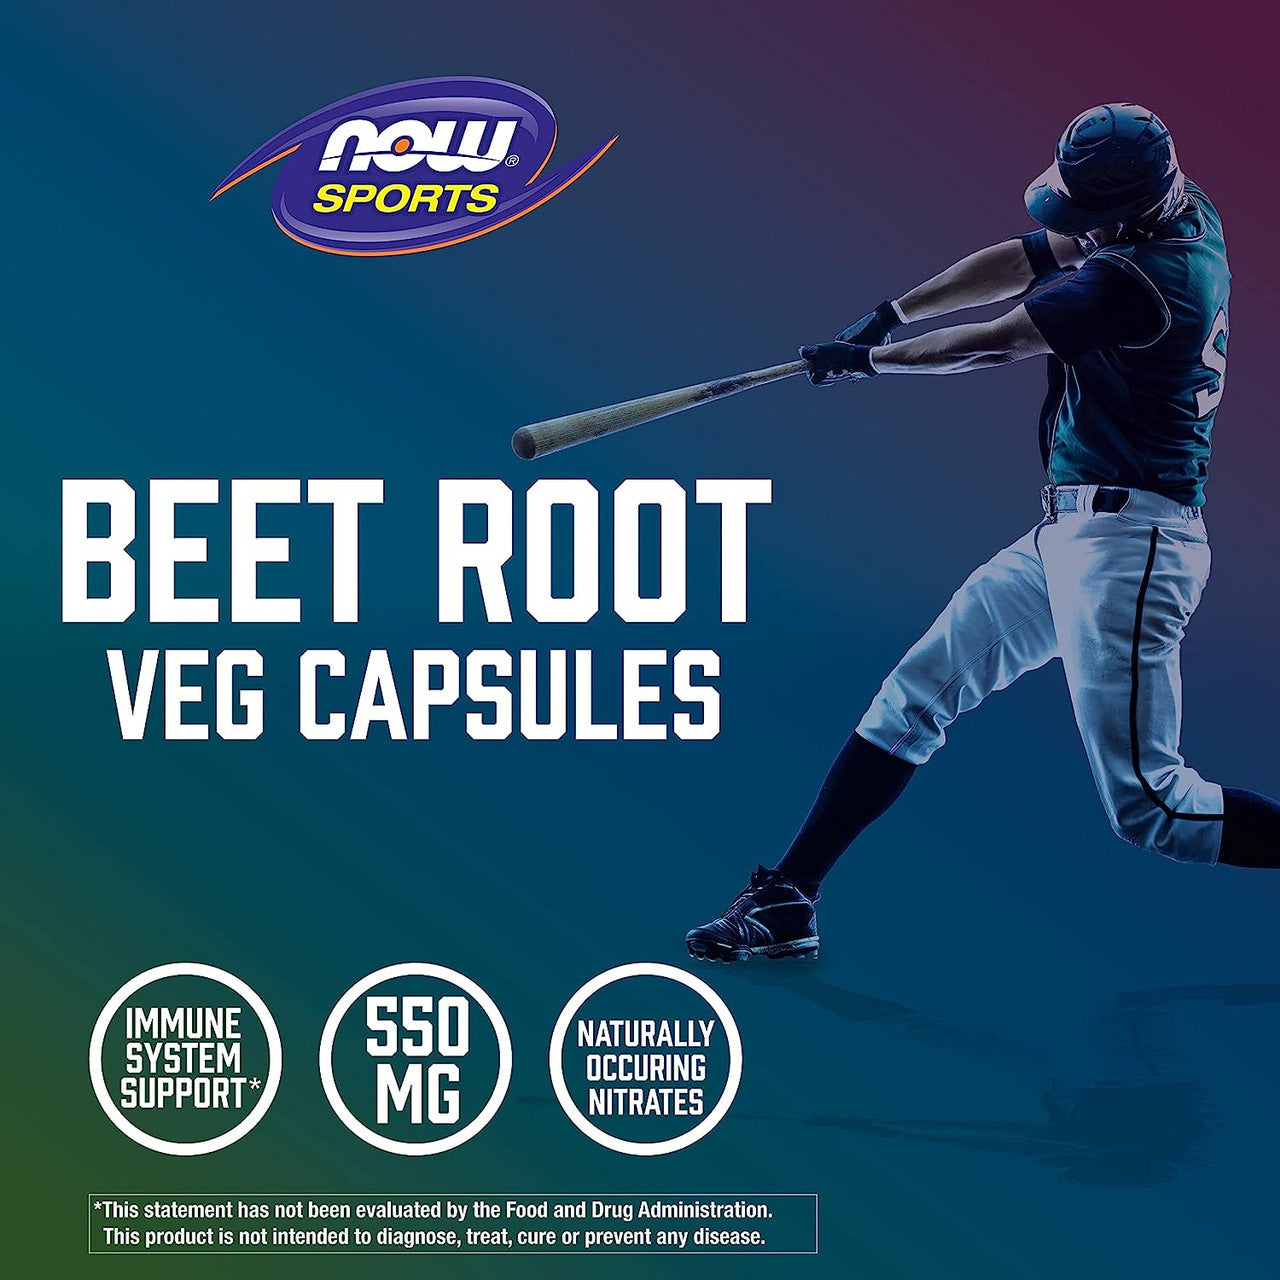 NOW Beet Root Baseball player image